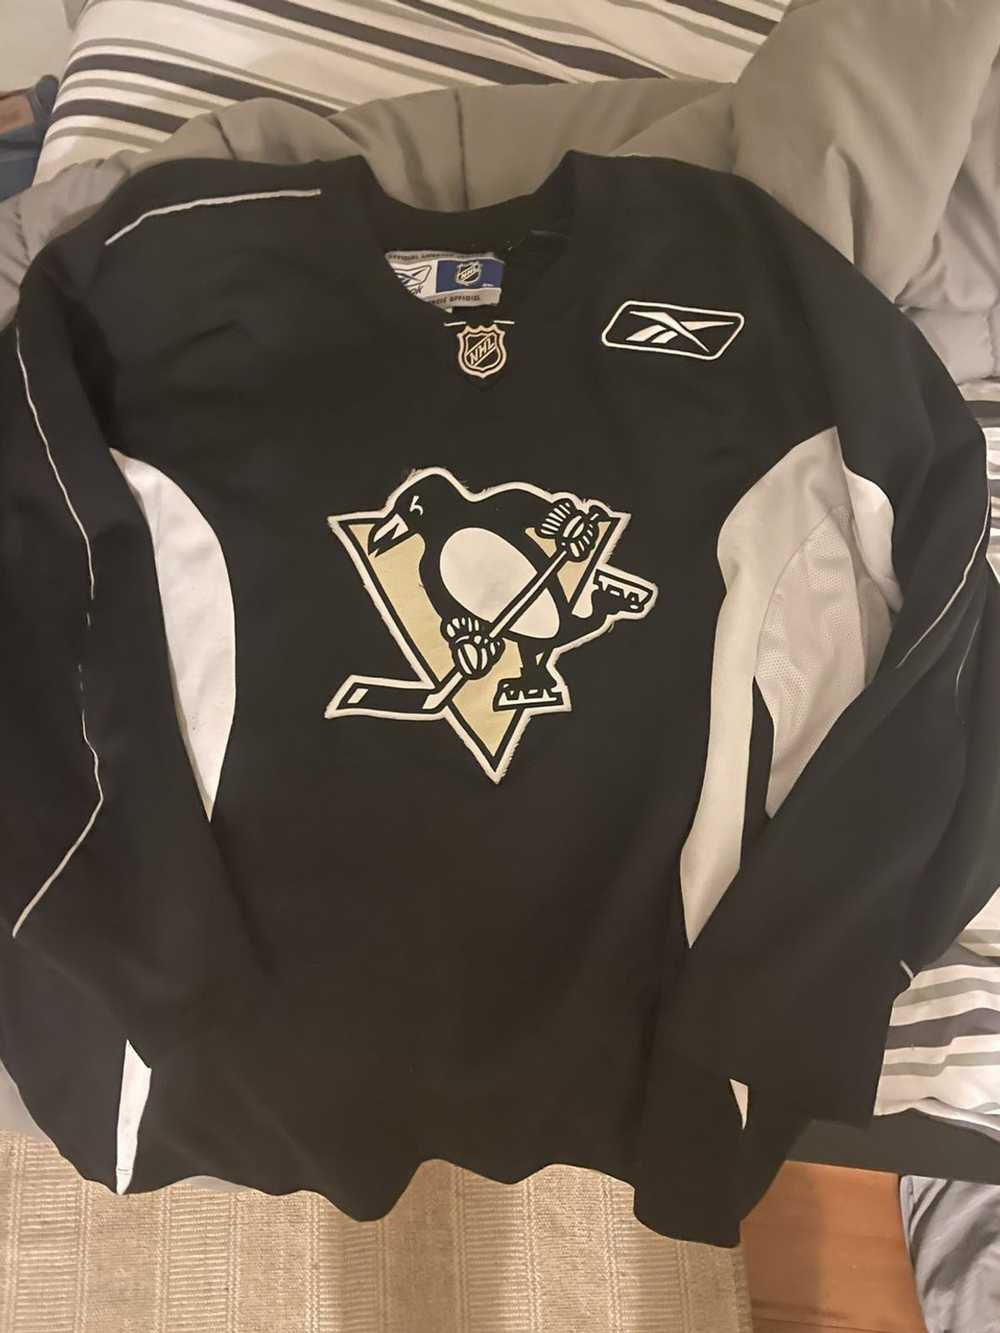 Vintage 2000's REEBOK NHL Pittsburgh Penguins Malkin Hockey Jersey Sz.